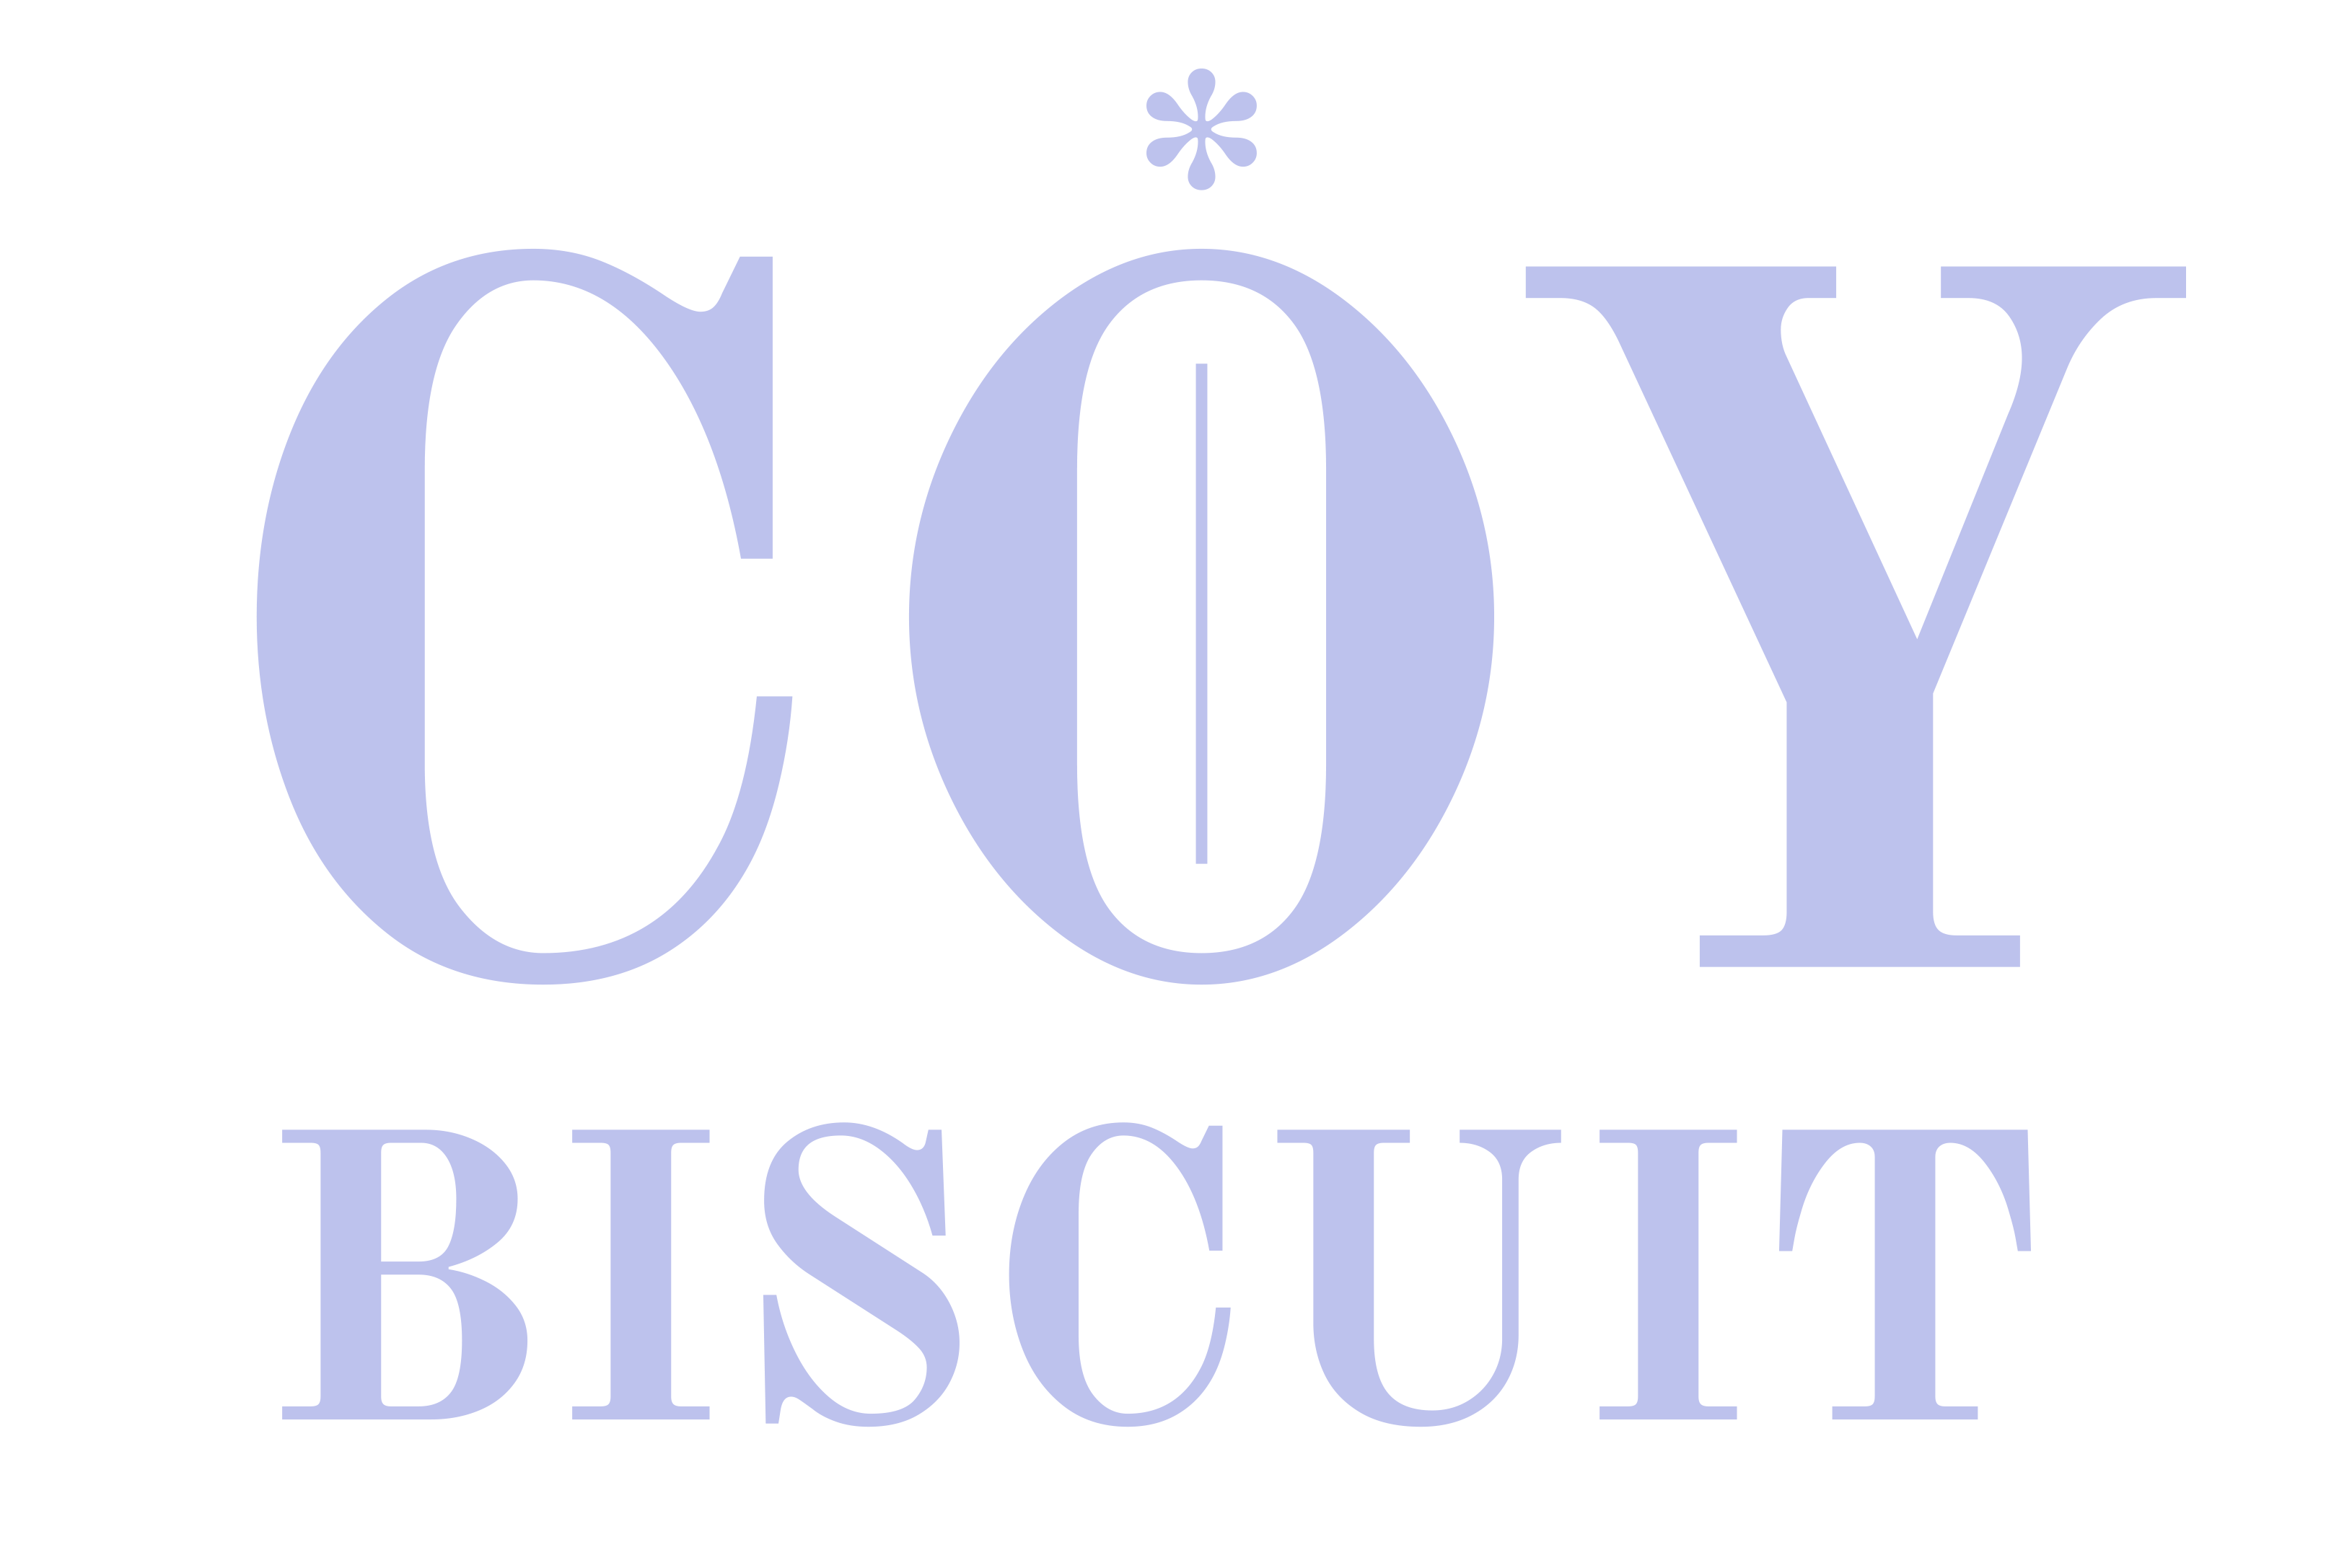 Masculine, Playful, Sporting Good Logo Design for BIscuit Boy by Jay Design  | Design #15317350